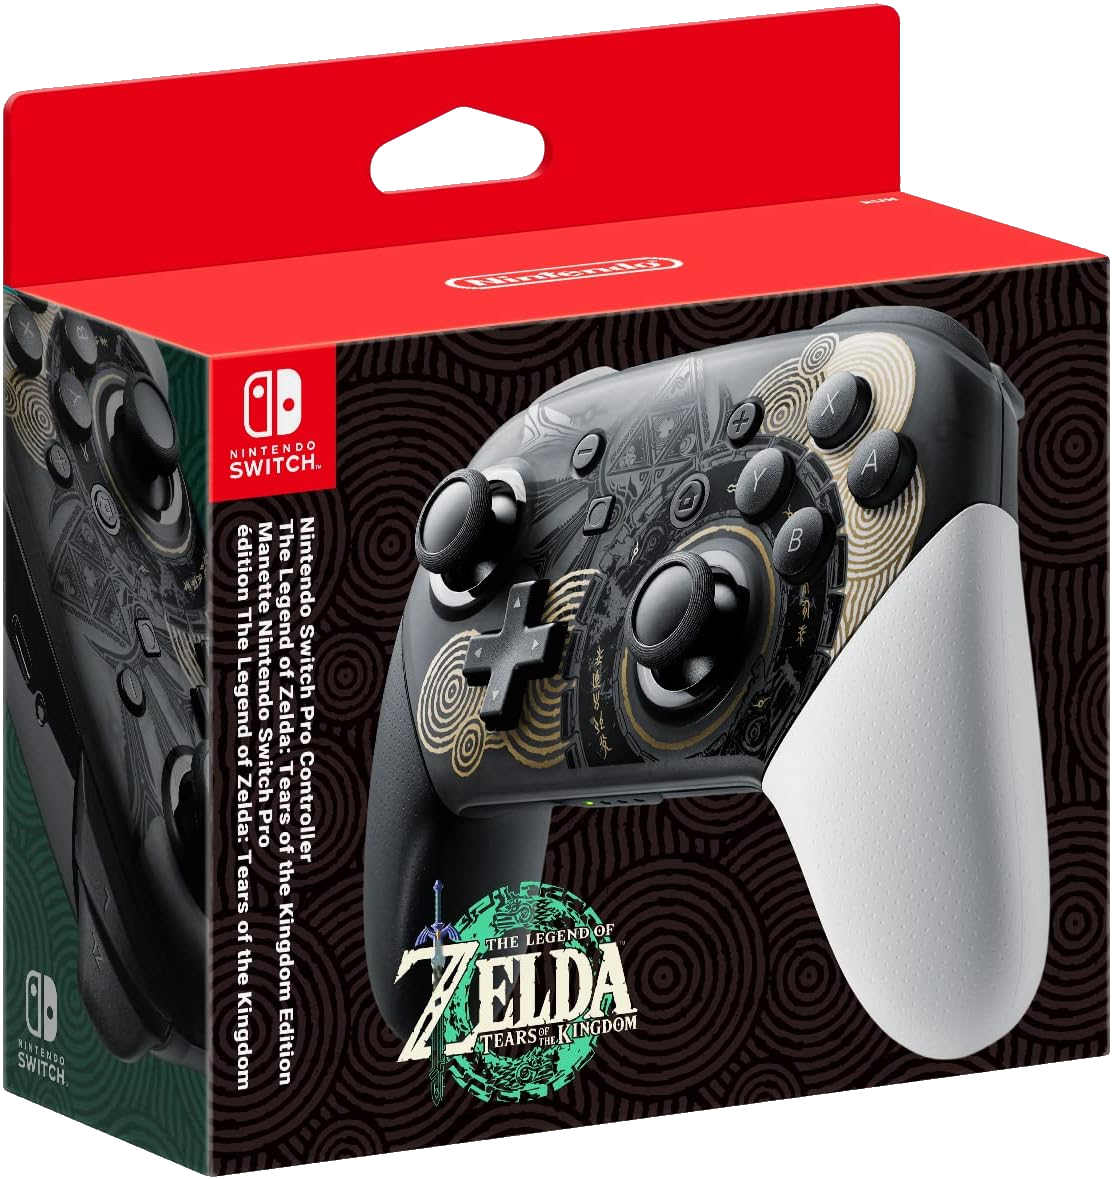  Nintendo Switch The Legend of Zelda: Tears of the Kingdom Edition Pro Controller [EU]